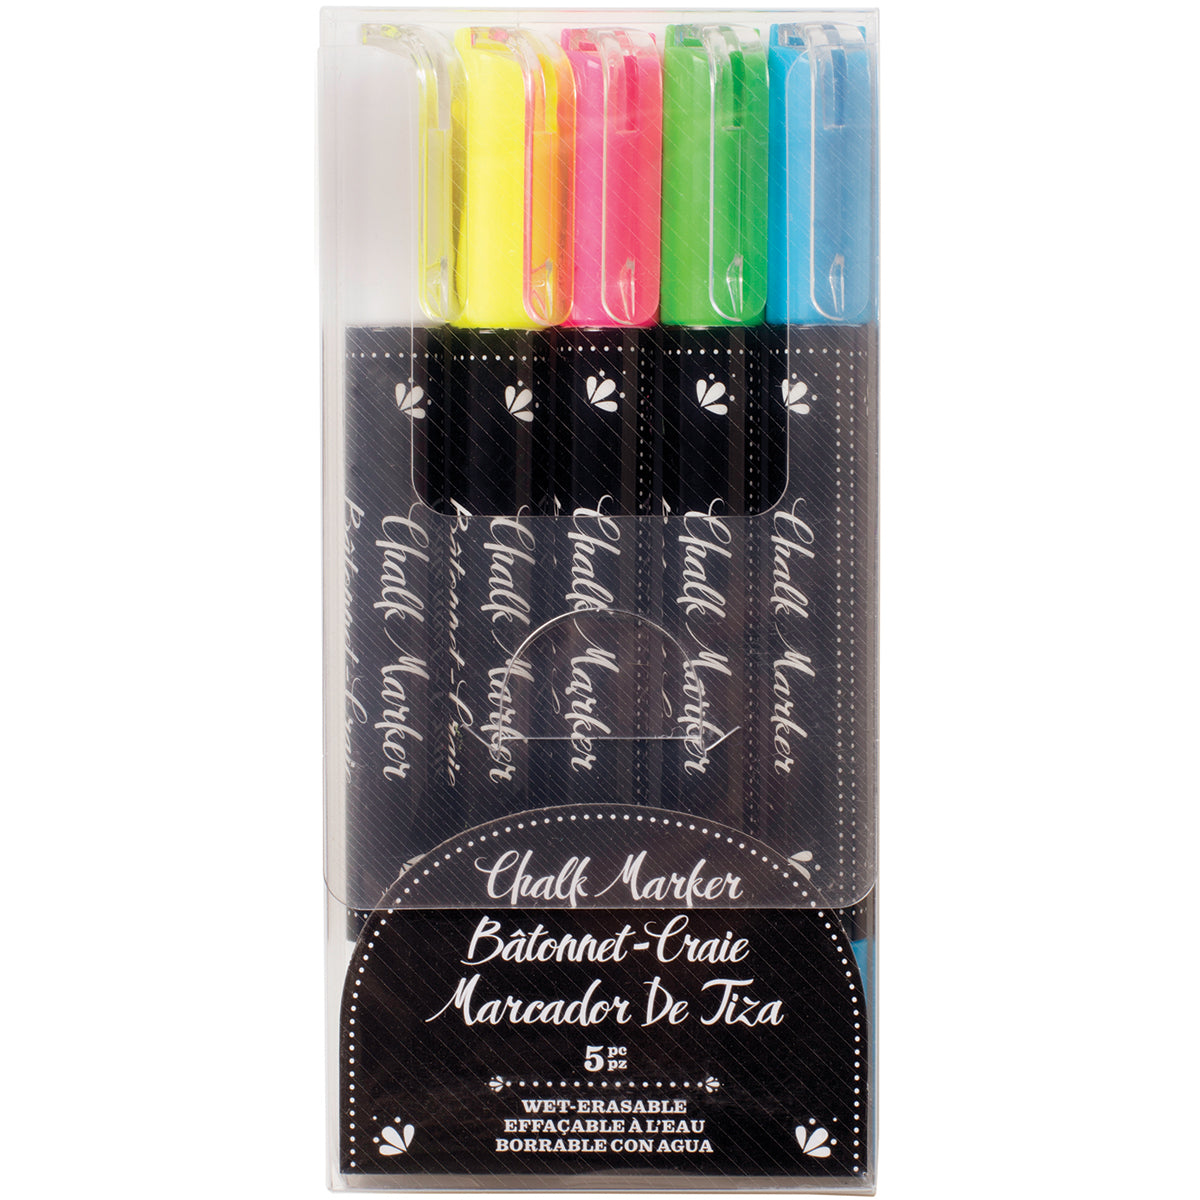 12 Packs: 5 ct. (60 total) Basic Fine-Point Chalk Marker Set by Craft  Smart®